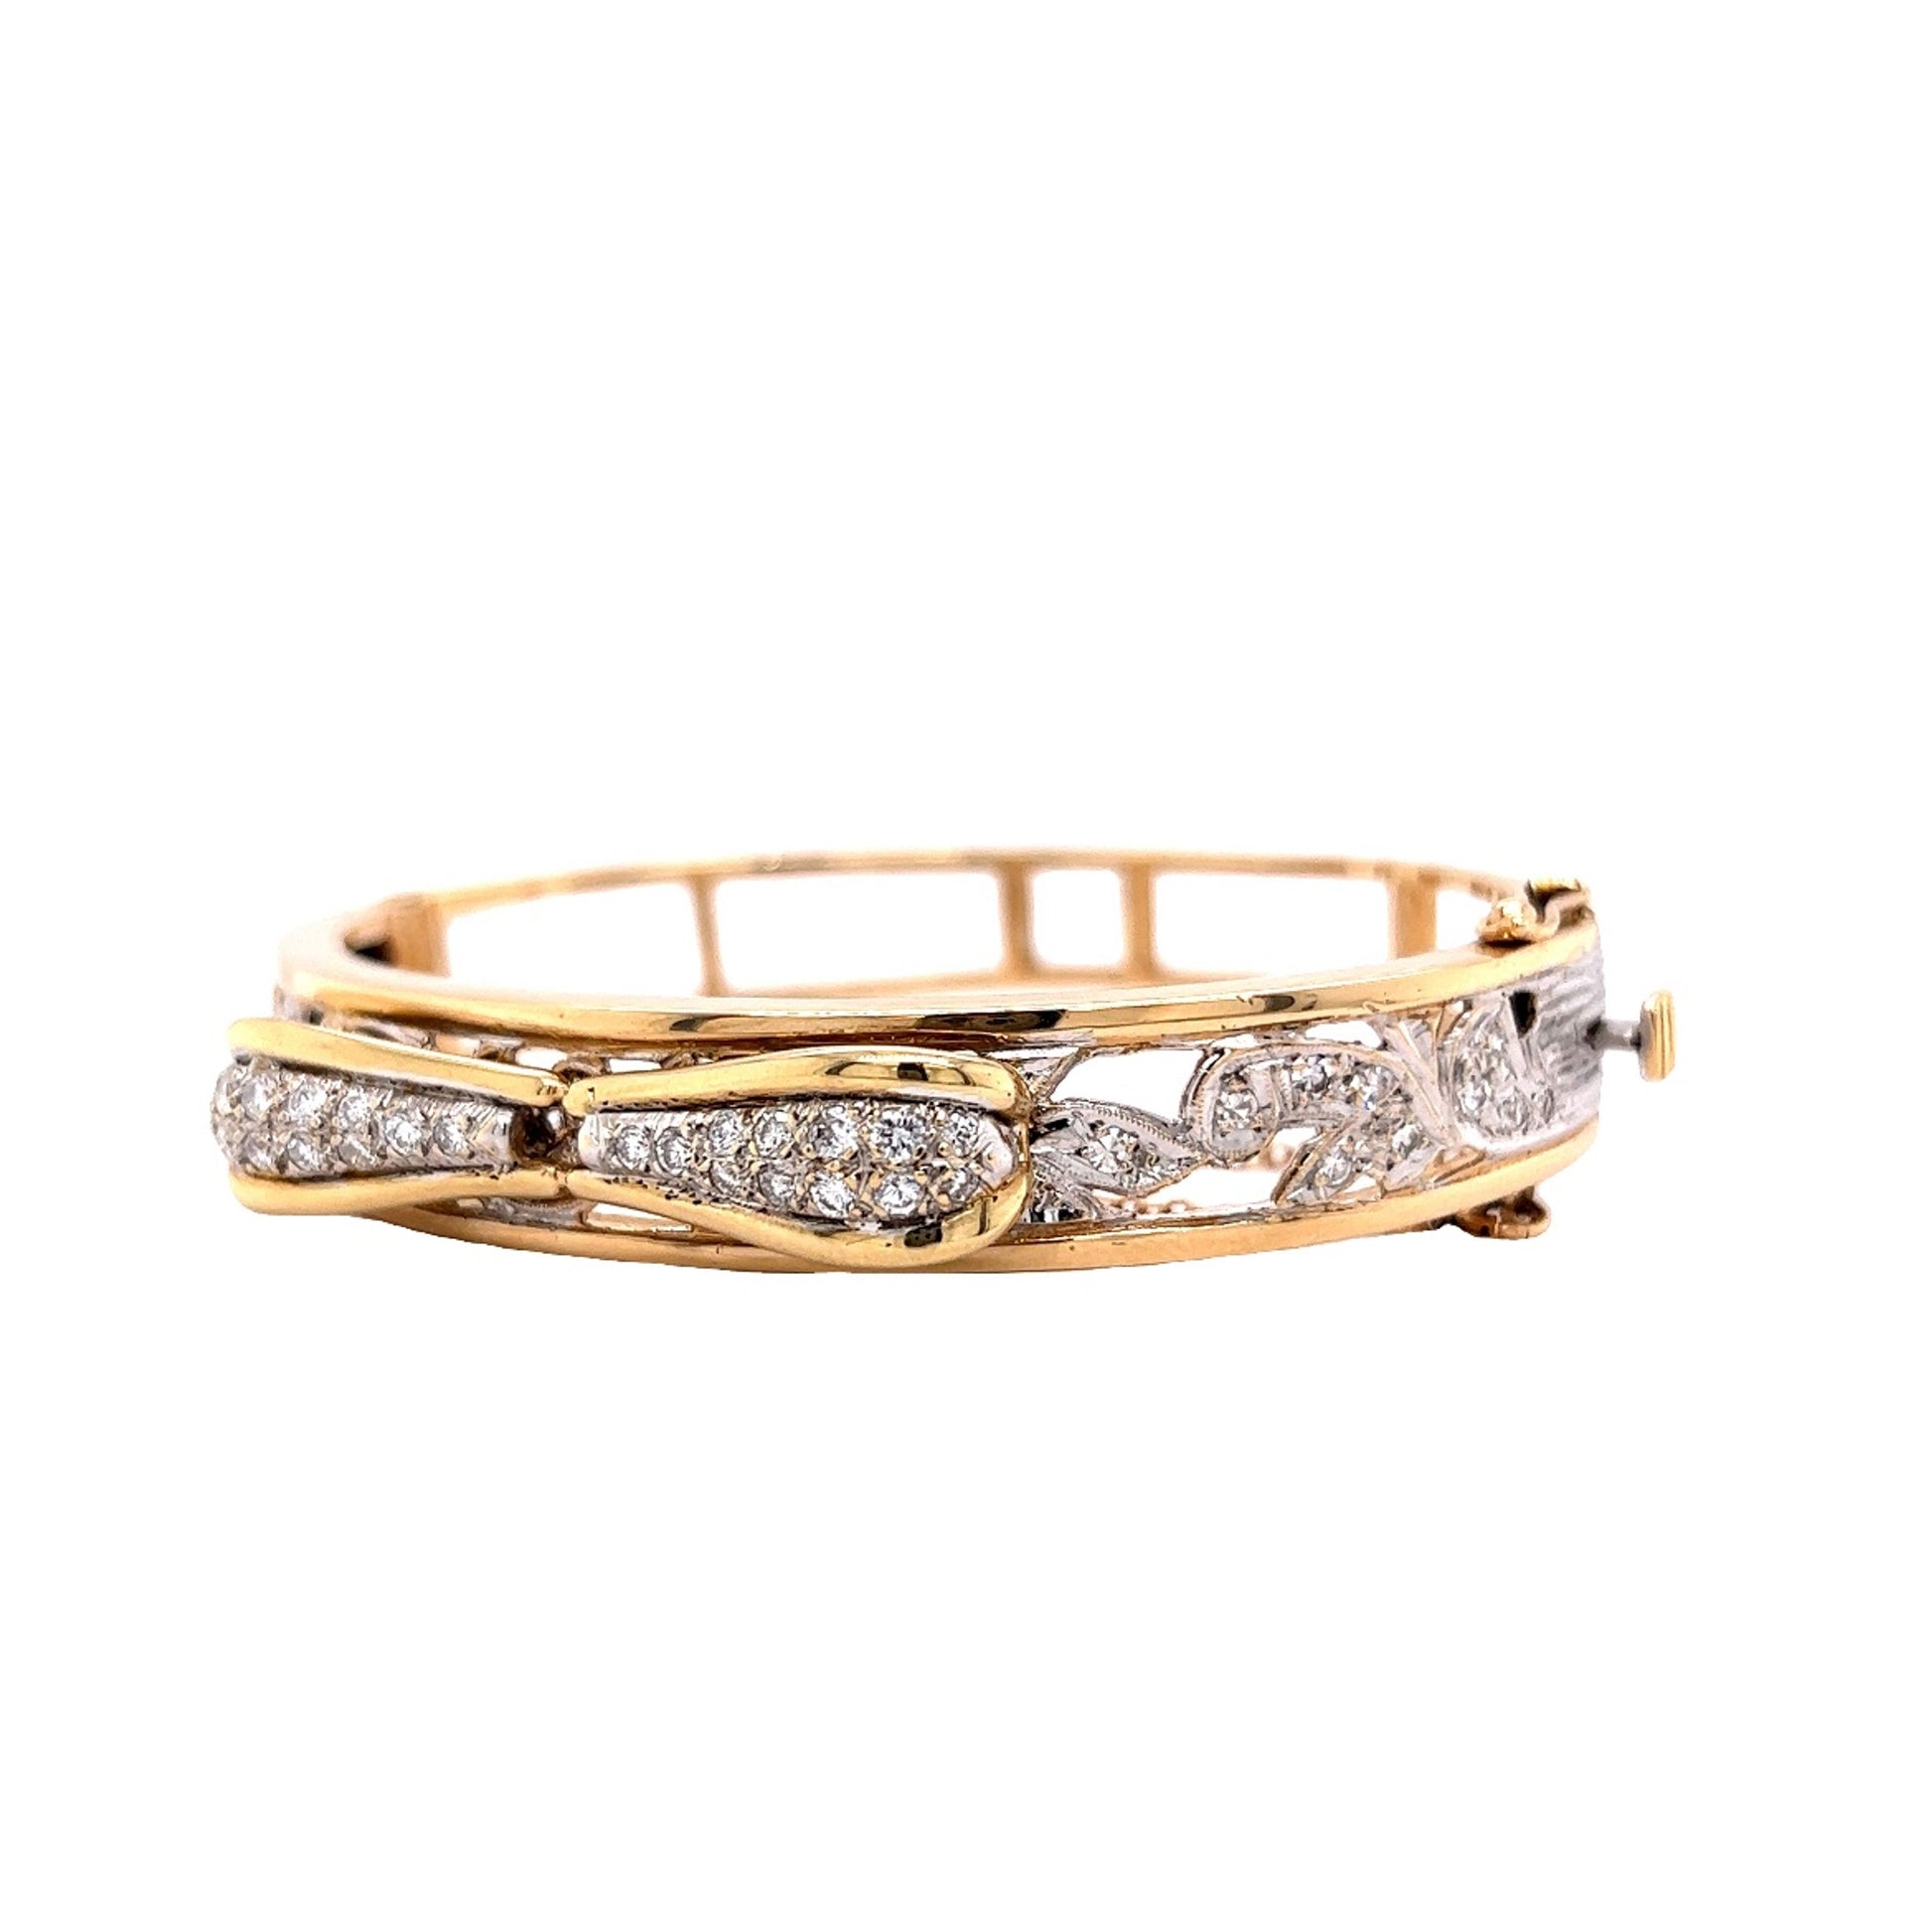 1.57 Diamond Bracelet in Yellow Gold by Stephanie Lake Design